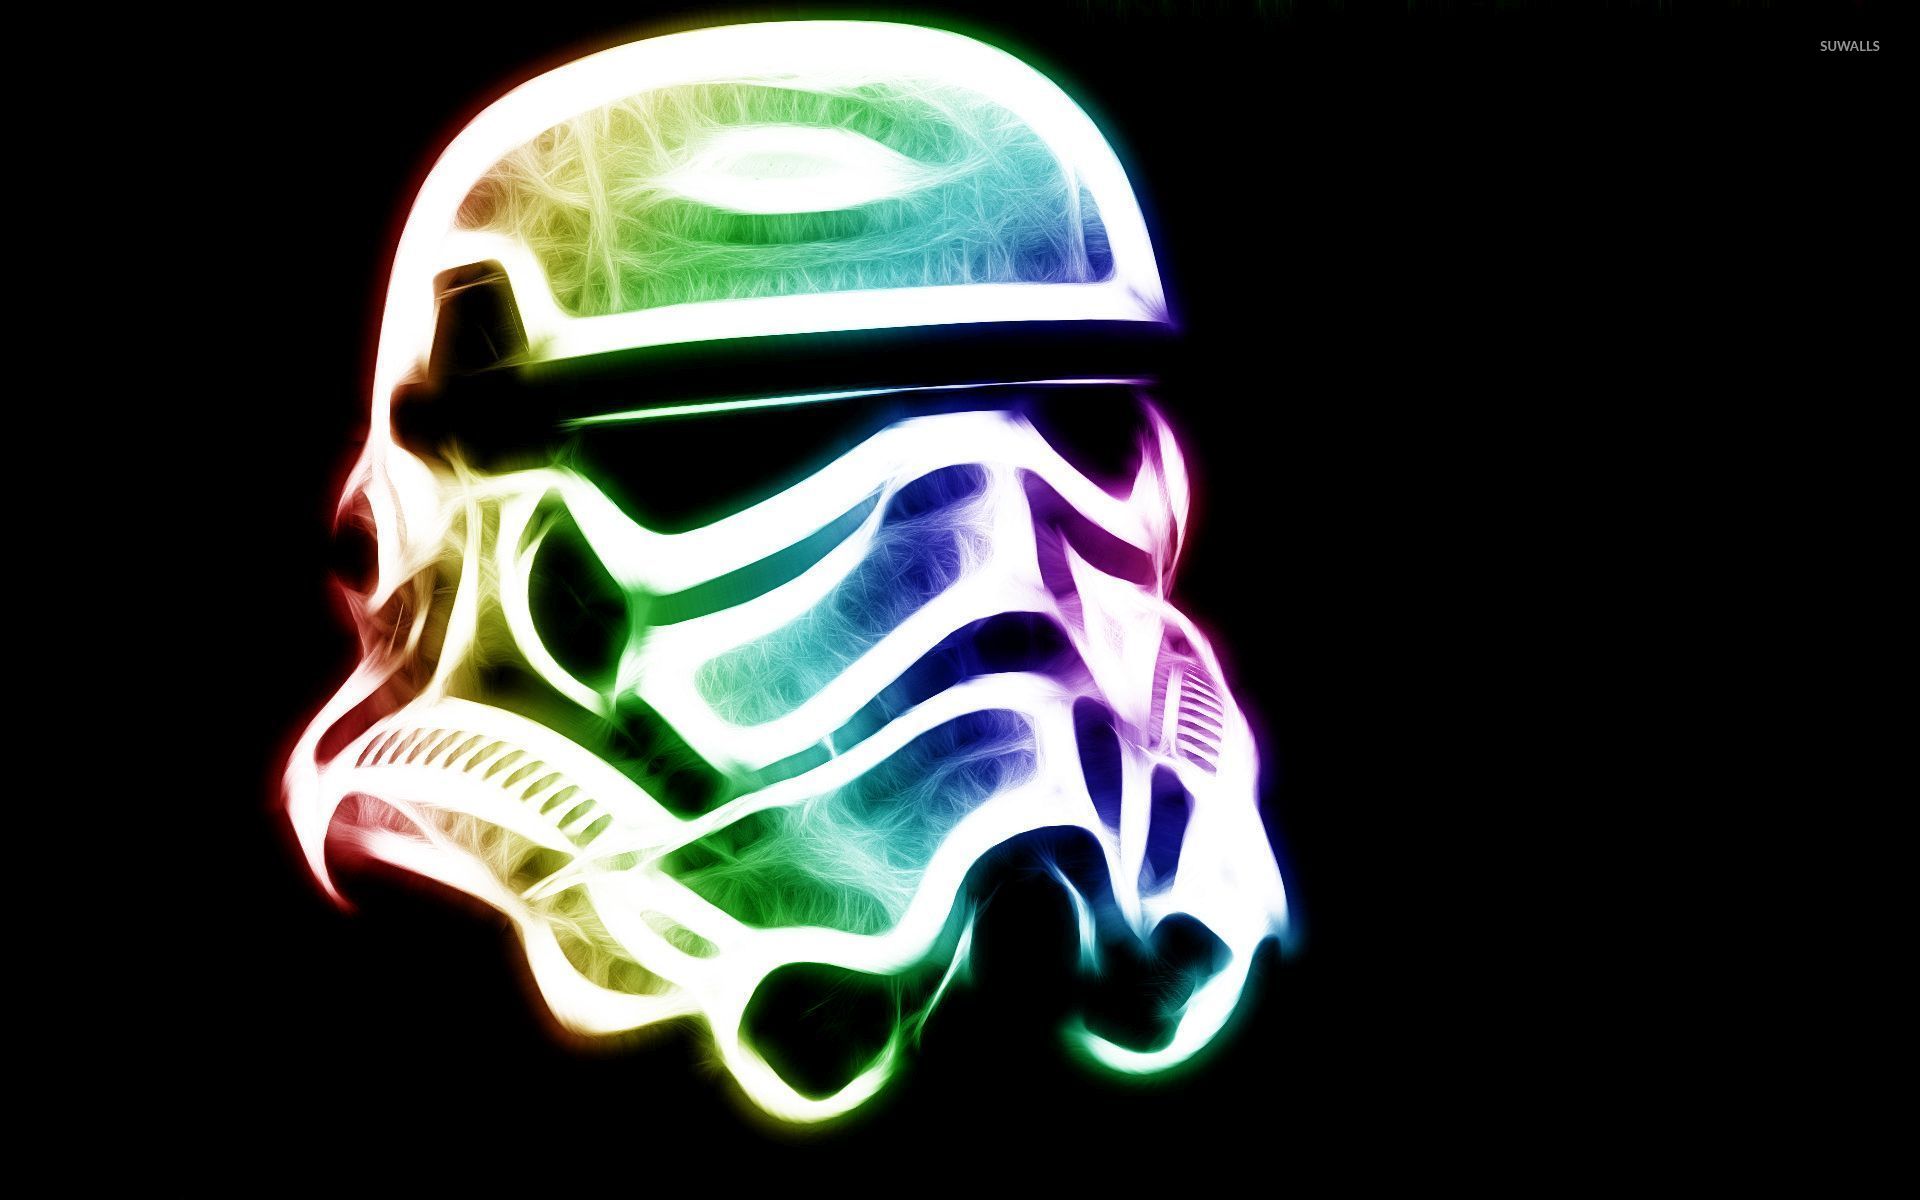 Star Wars Stormtrooper Wallpaper